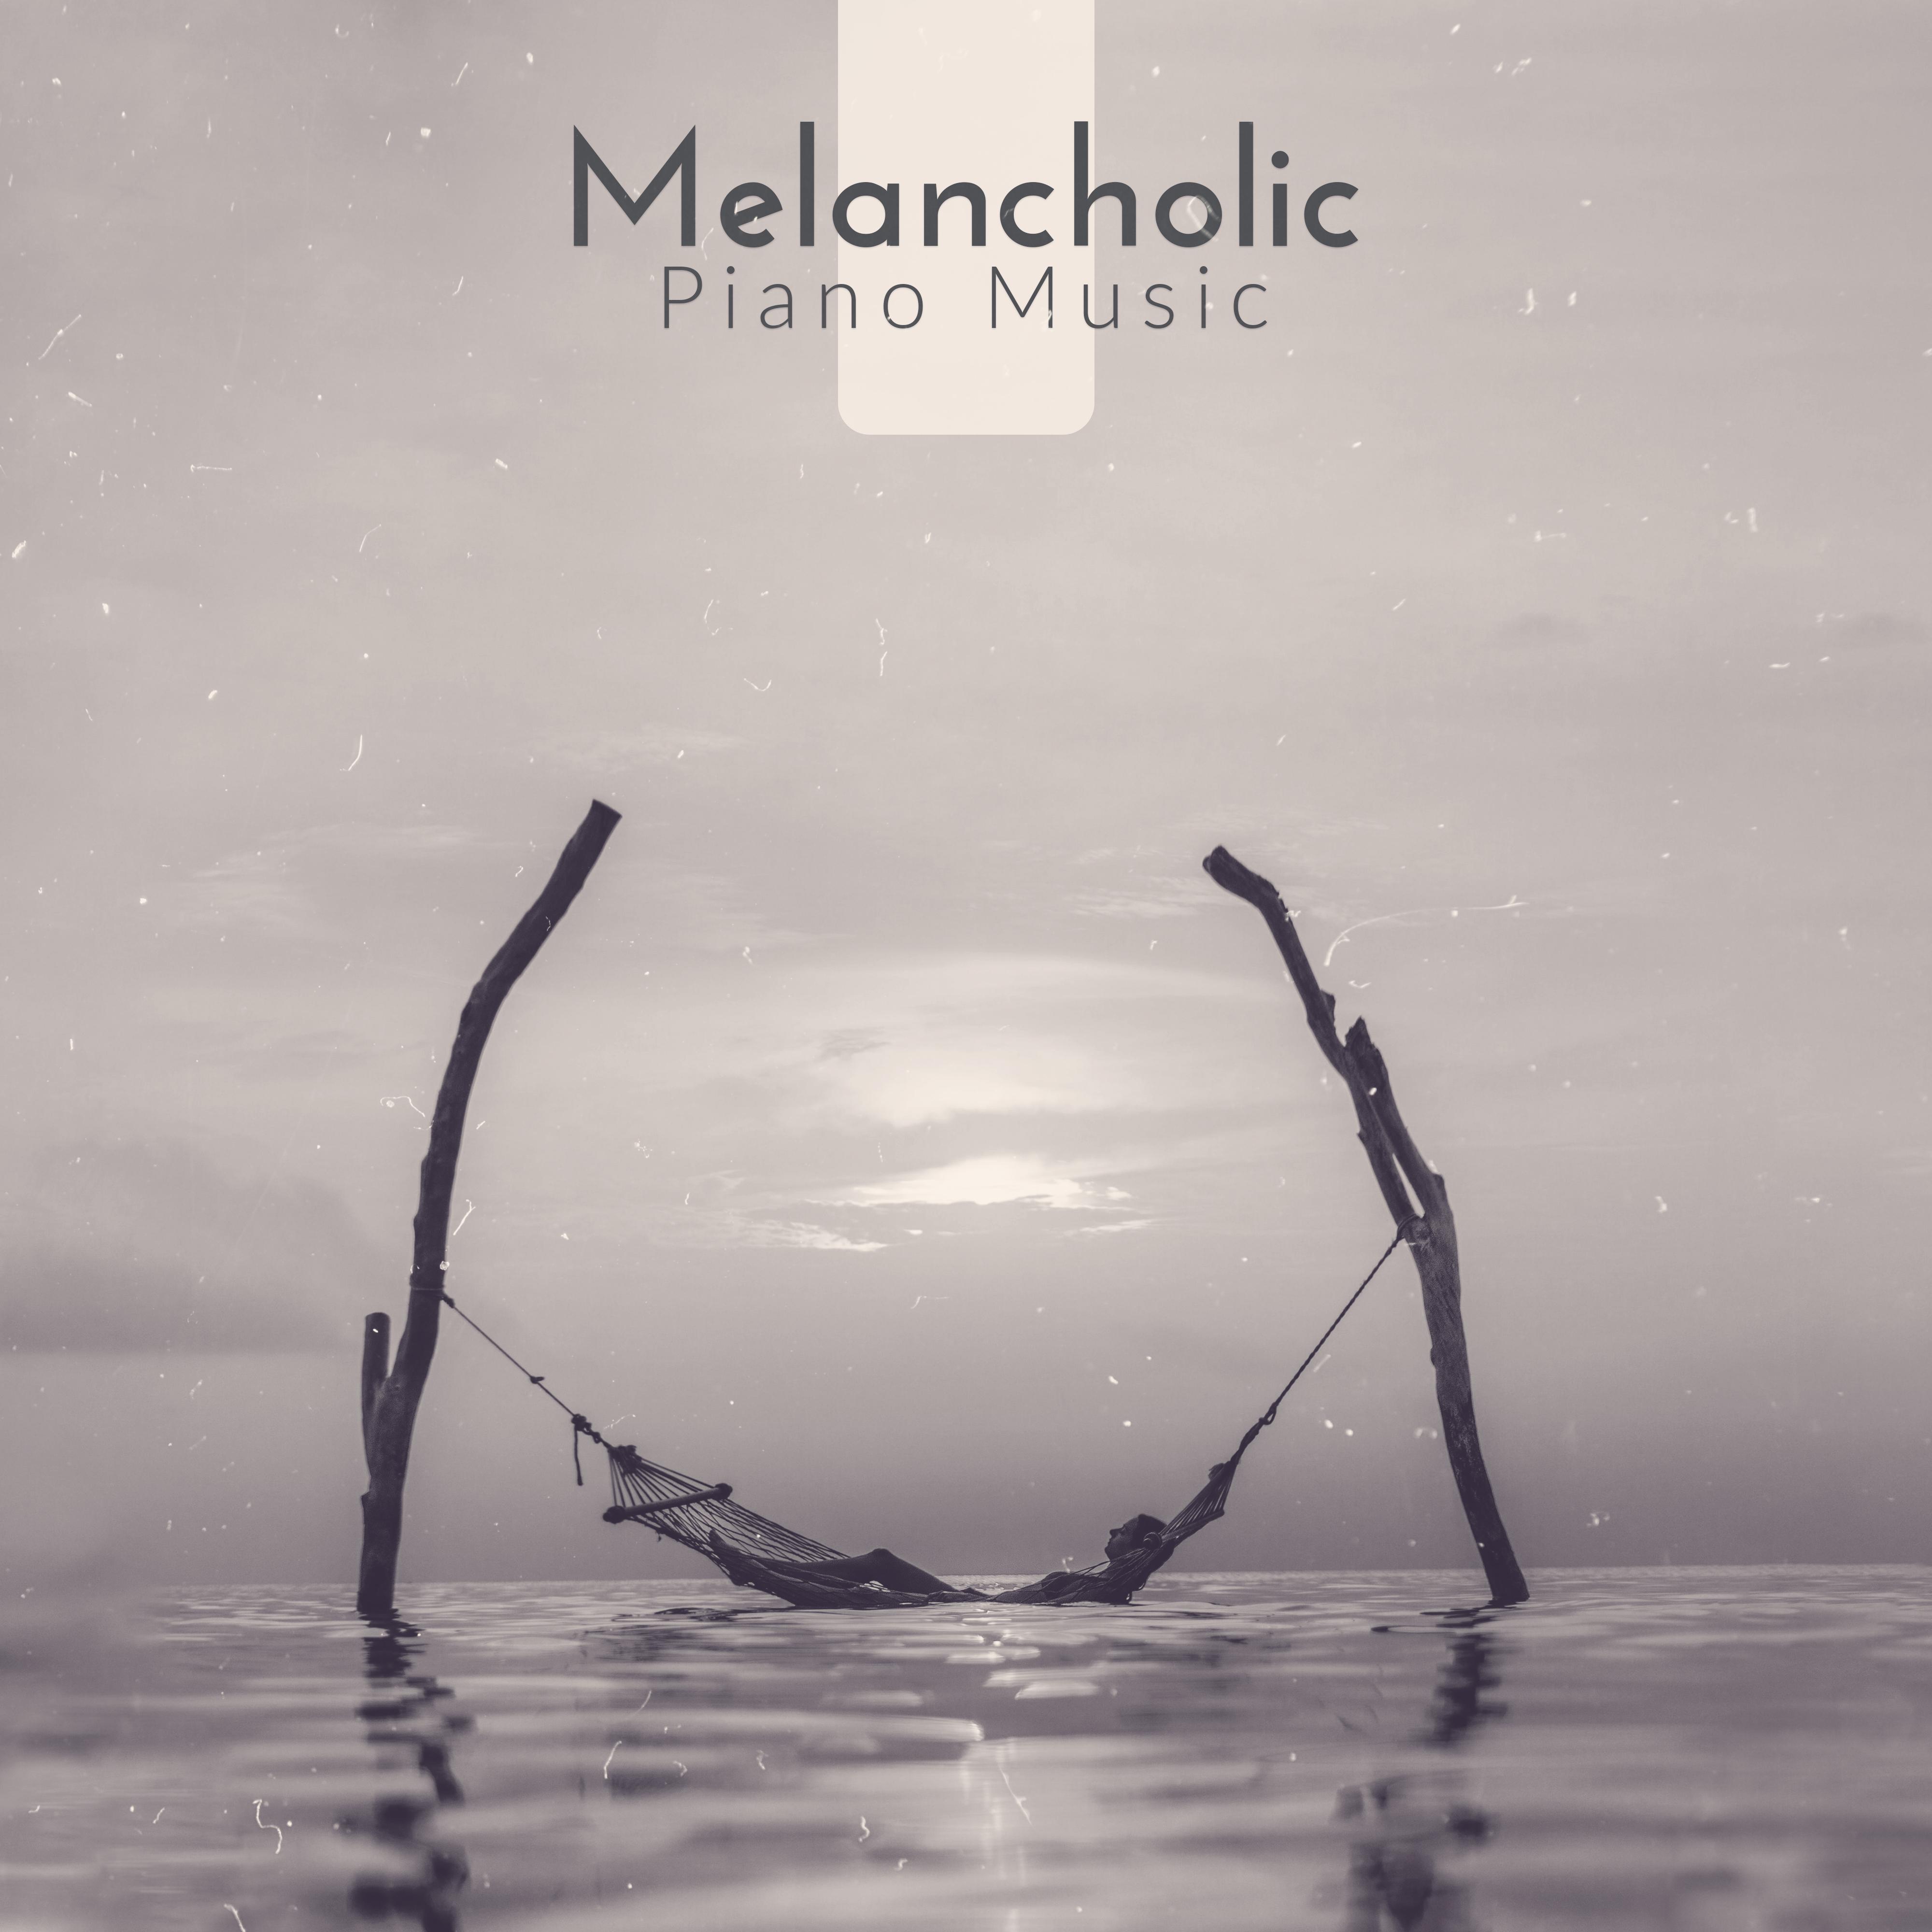 Melancholic Piano Music